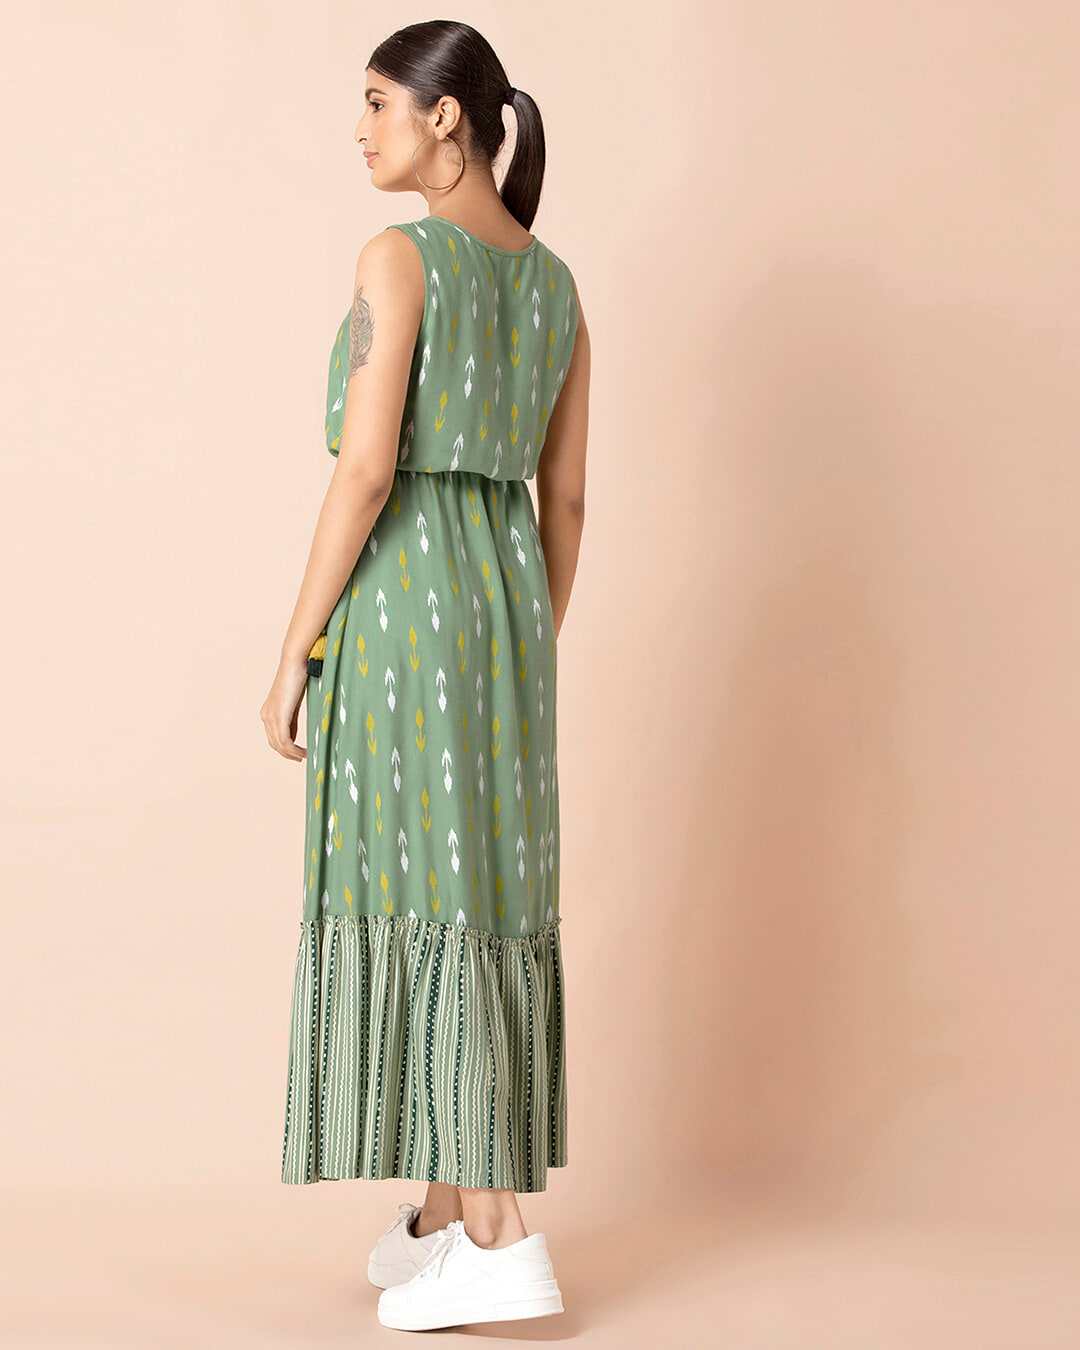 Shop Women's Green Ikat Frilled Drawstring Sleeveless A-Line Tunic-Back